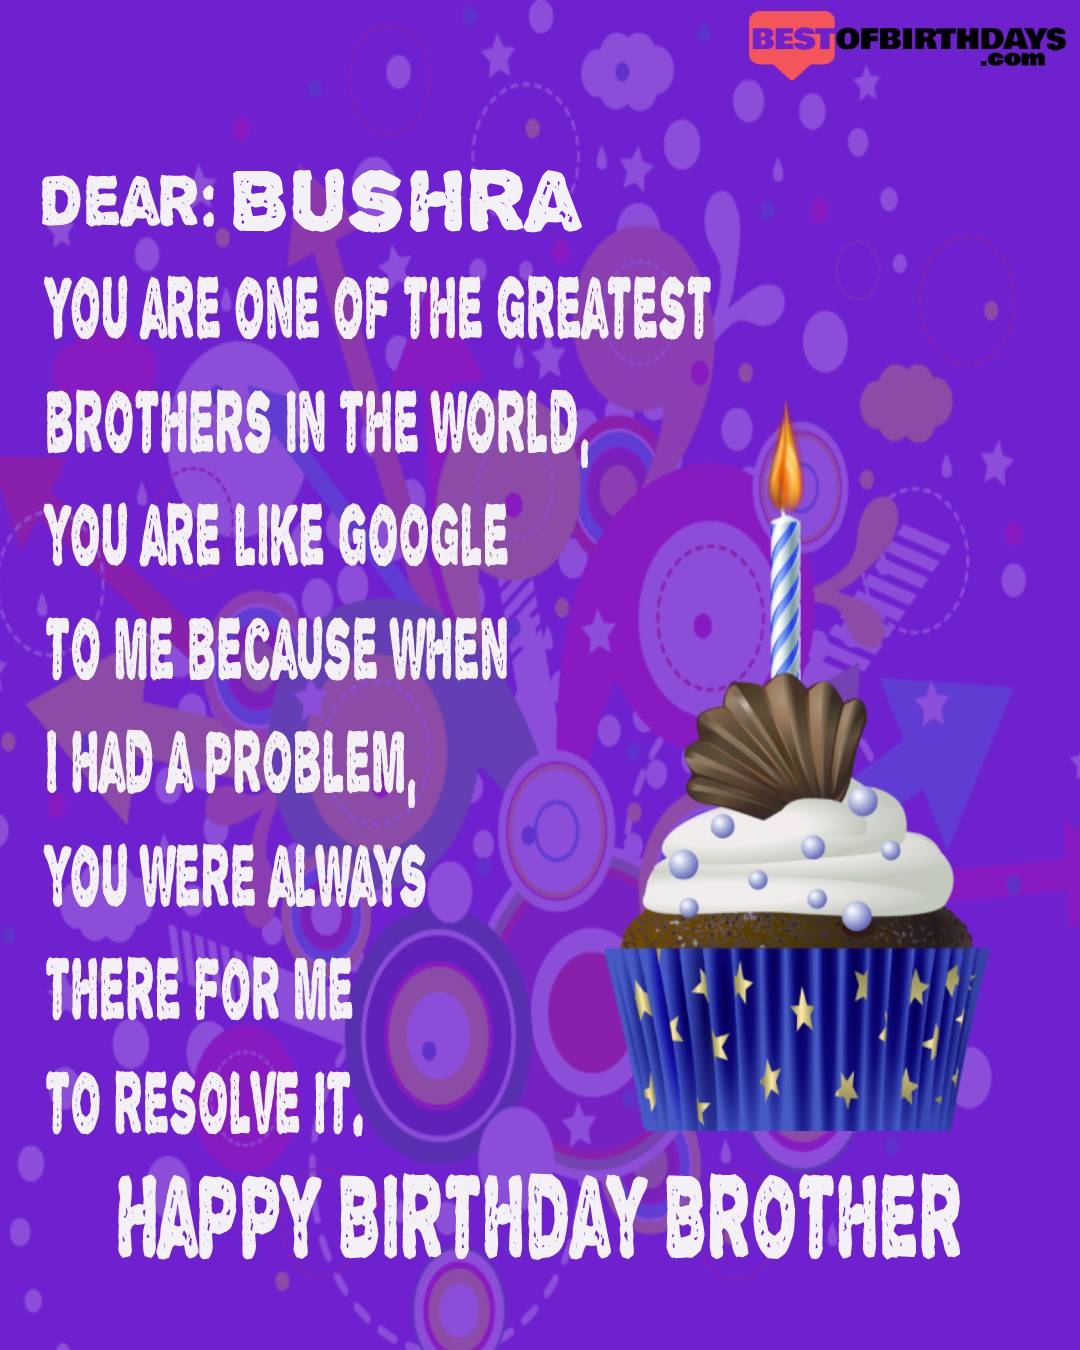 Happy birthday bushra bhai brother bro